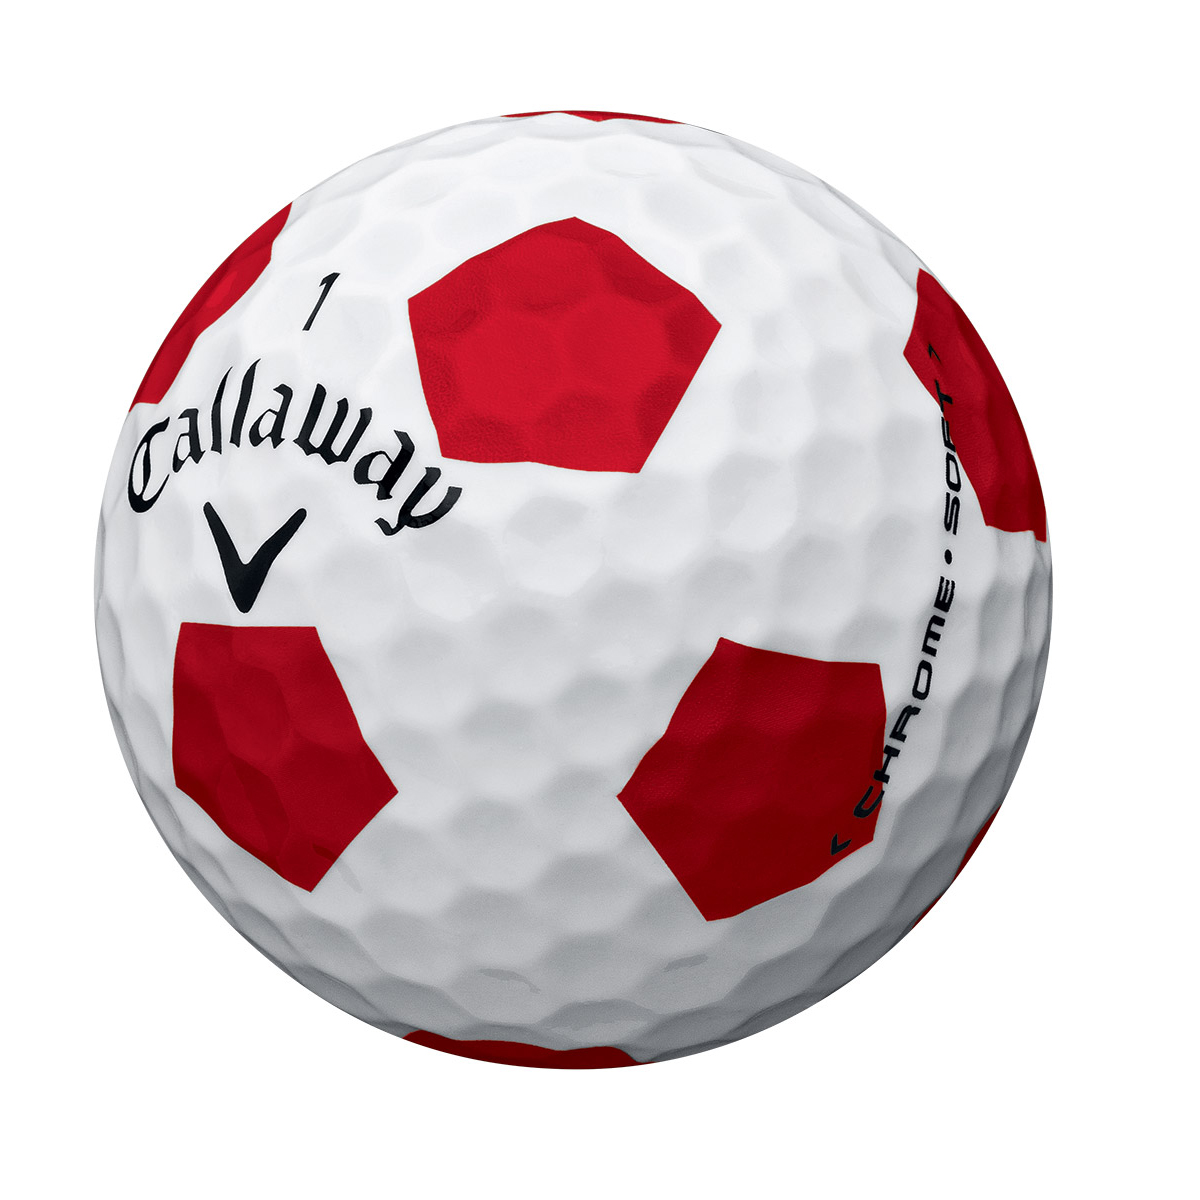 Callaway Golf Chrome Soft Truvis 12 Ball Pack from american golf